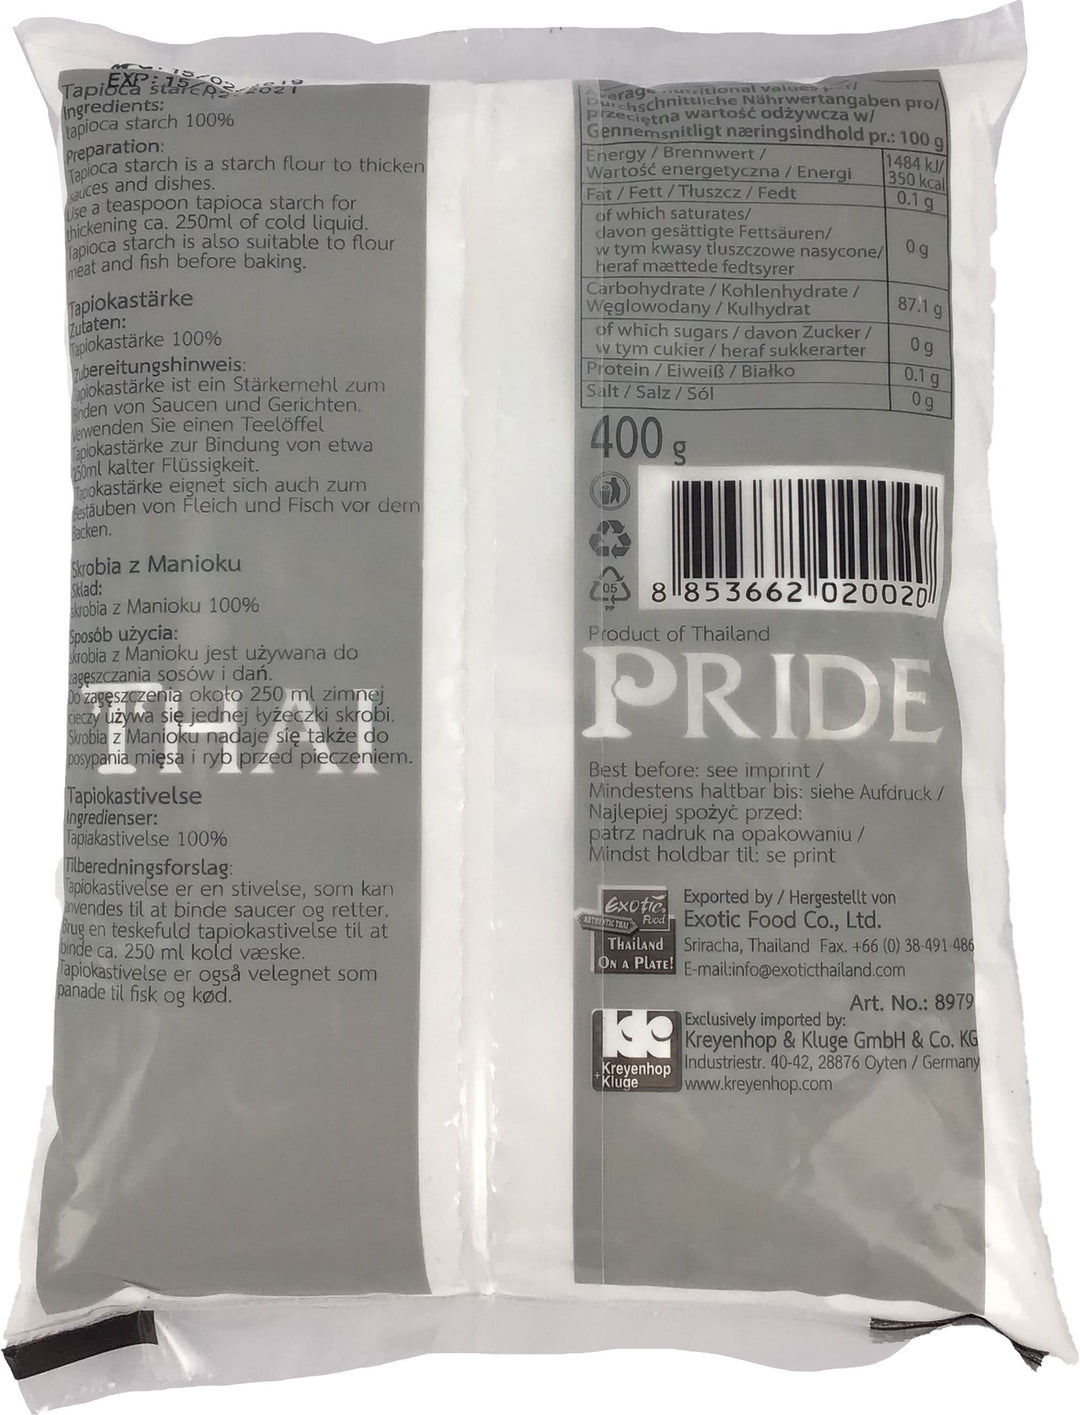 THAI PRIDE 特选木薯粉 400g / Tapiokastärke 400g